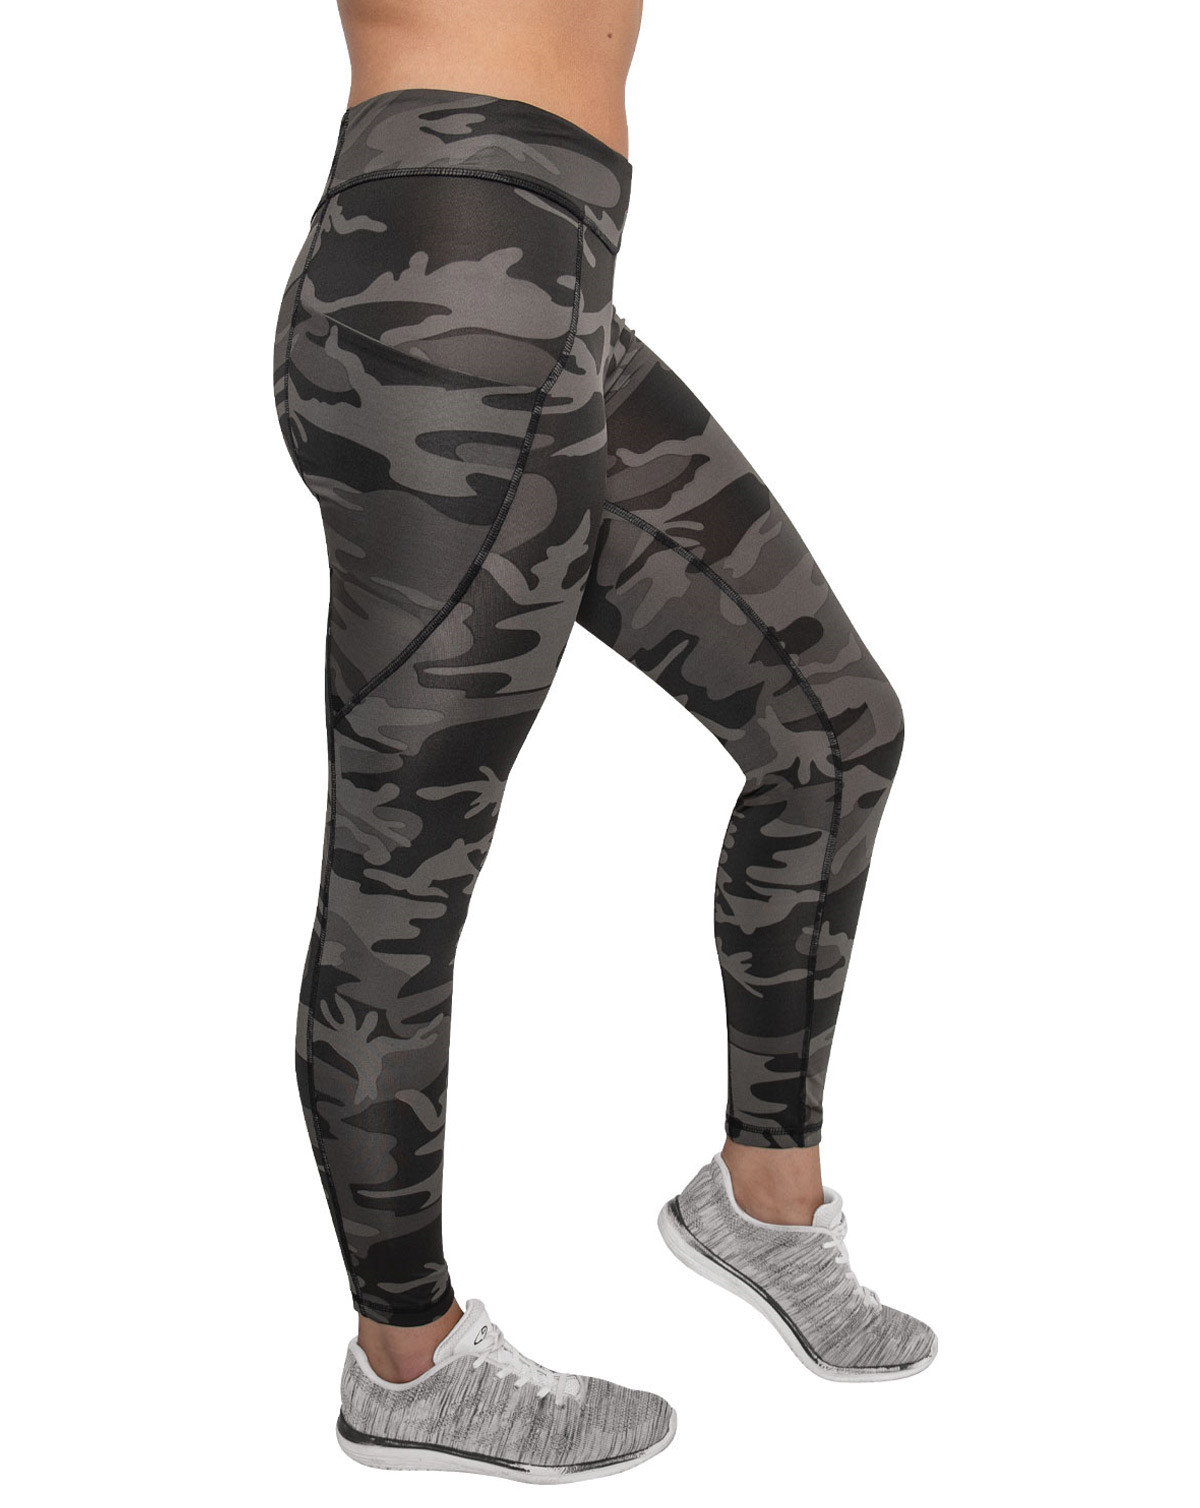 #2 - Rothco Womens Workout Performance Camo Leggings With Pockets (Black Camo, XL)